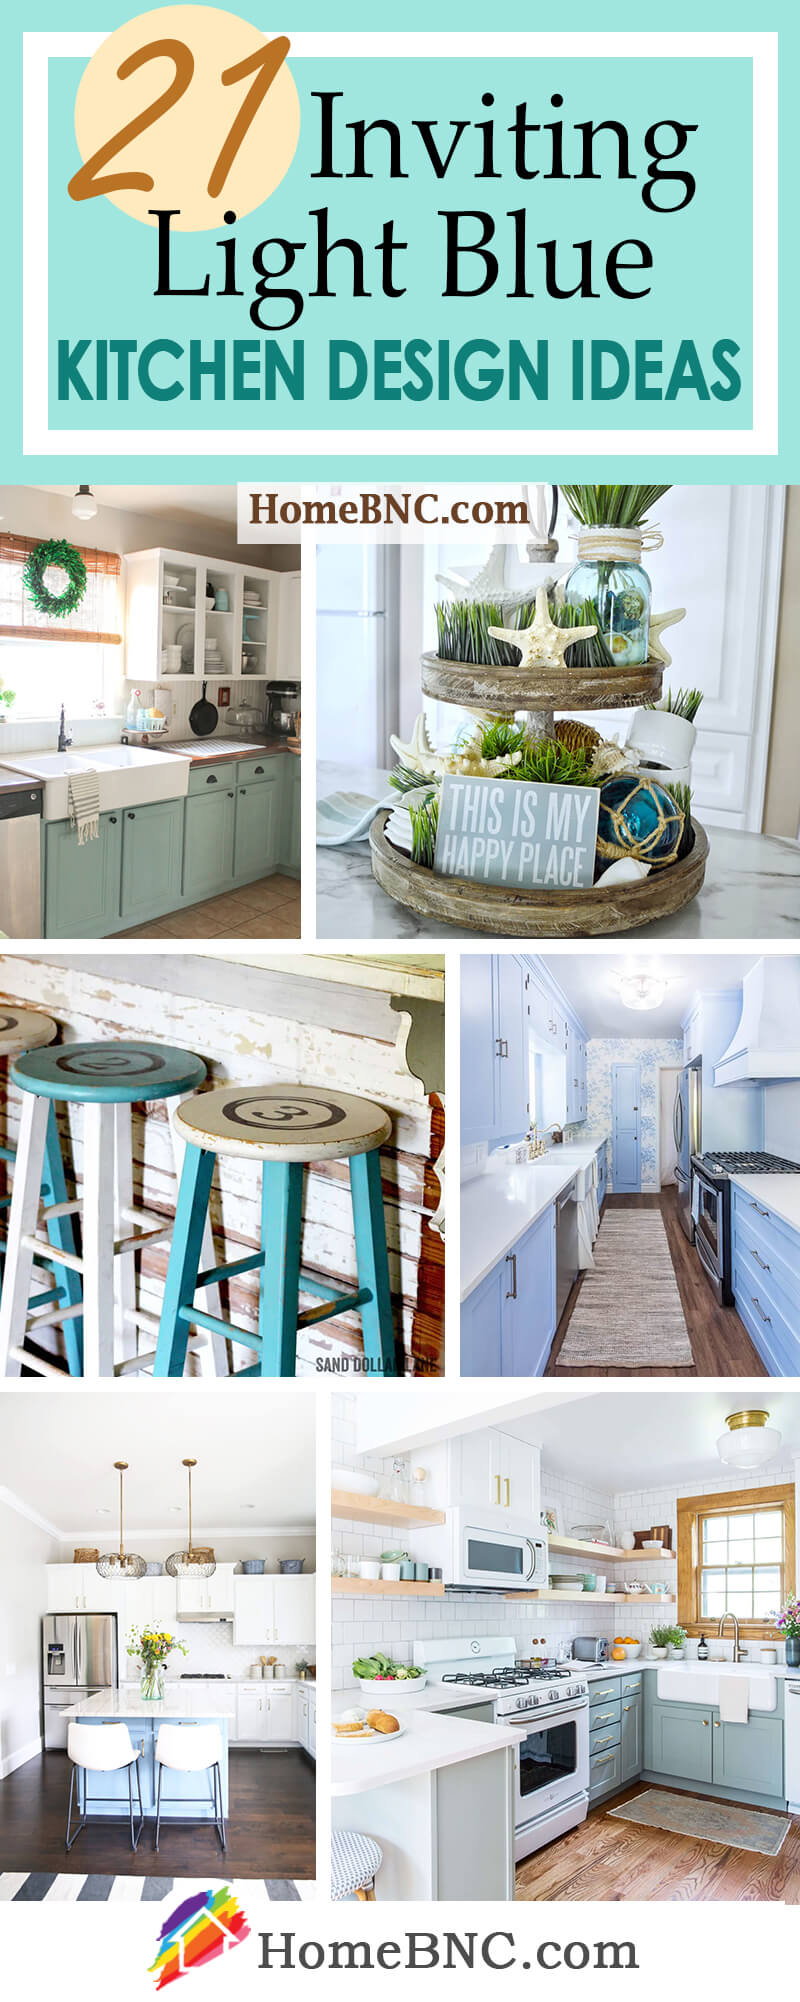 Light Blue Kitchen Design and Decor Ideas